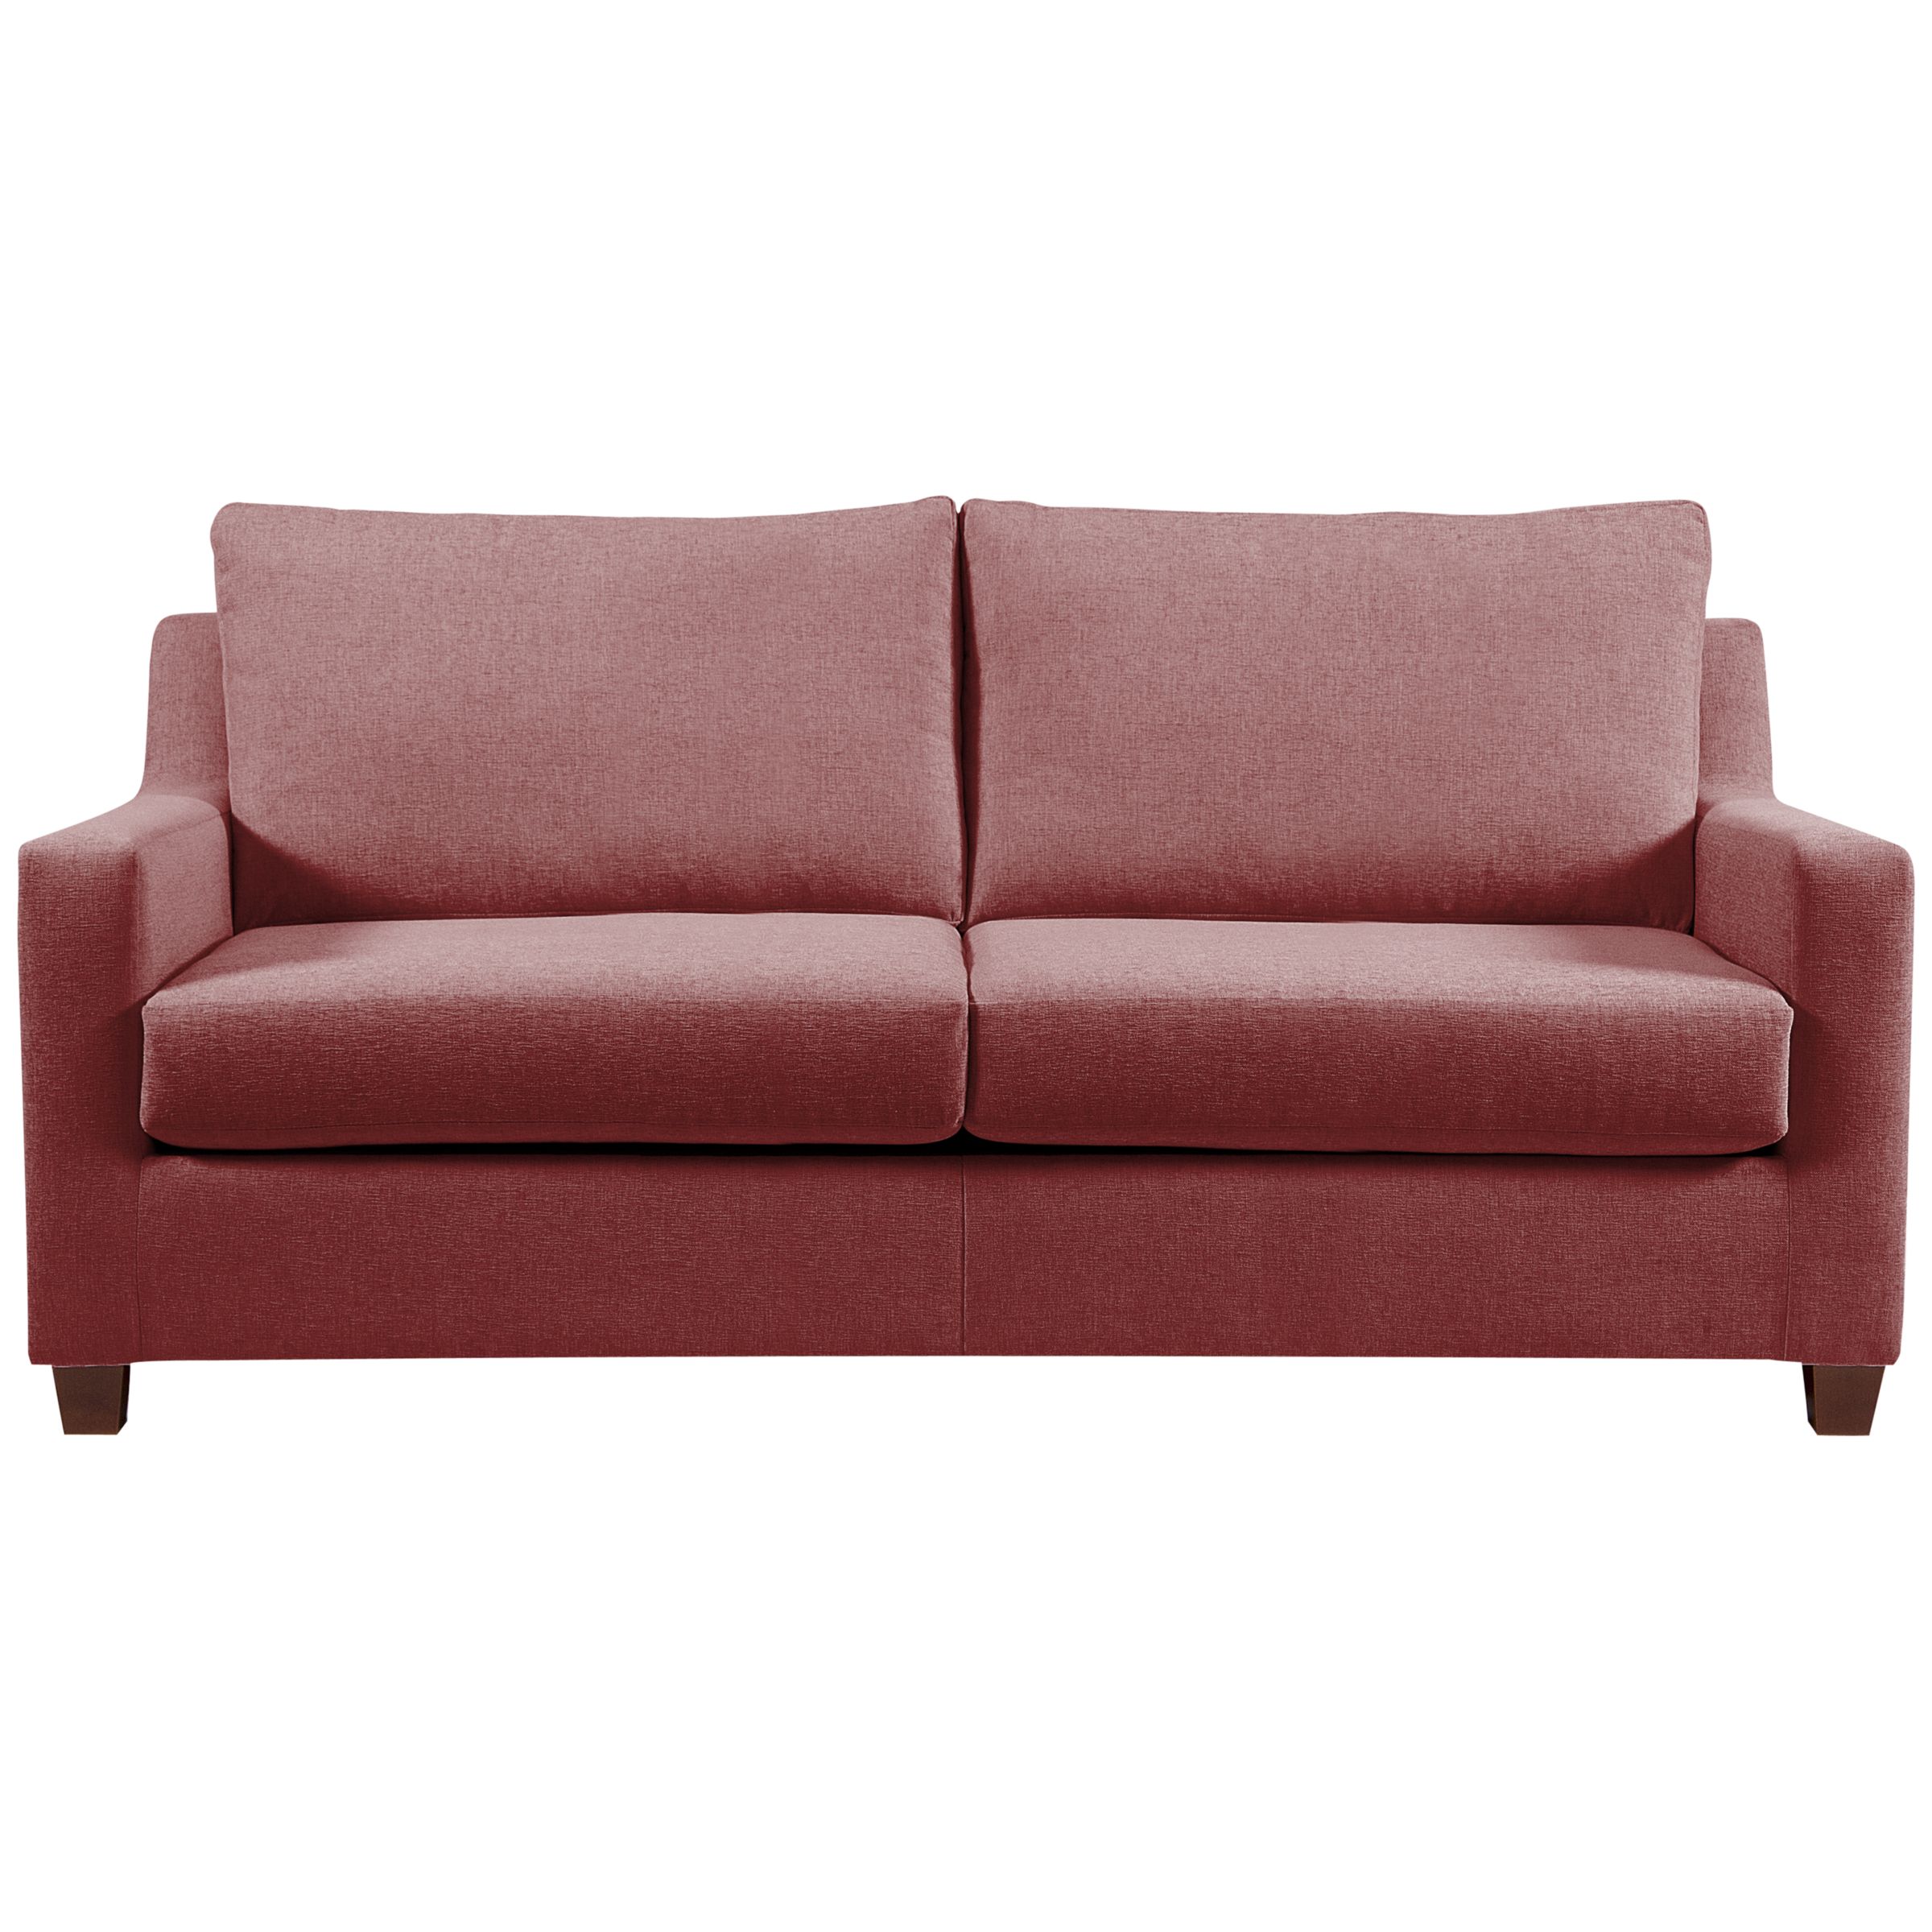 John Lewis Bizet Large Sofa Bed with Memory Foam Matress, Red, width 208cm